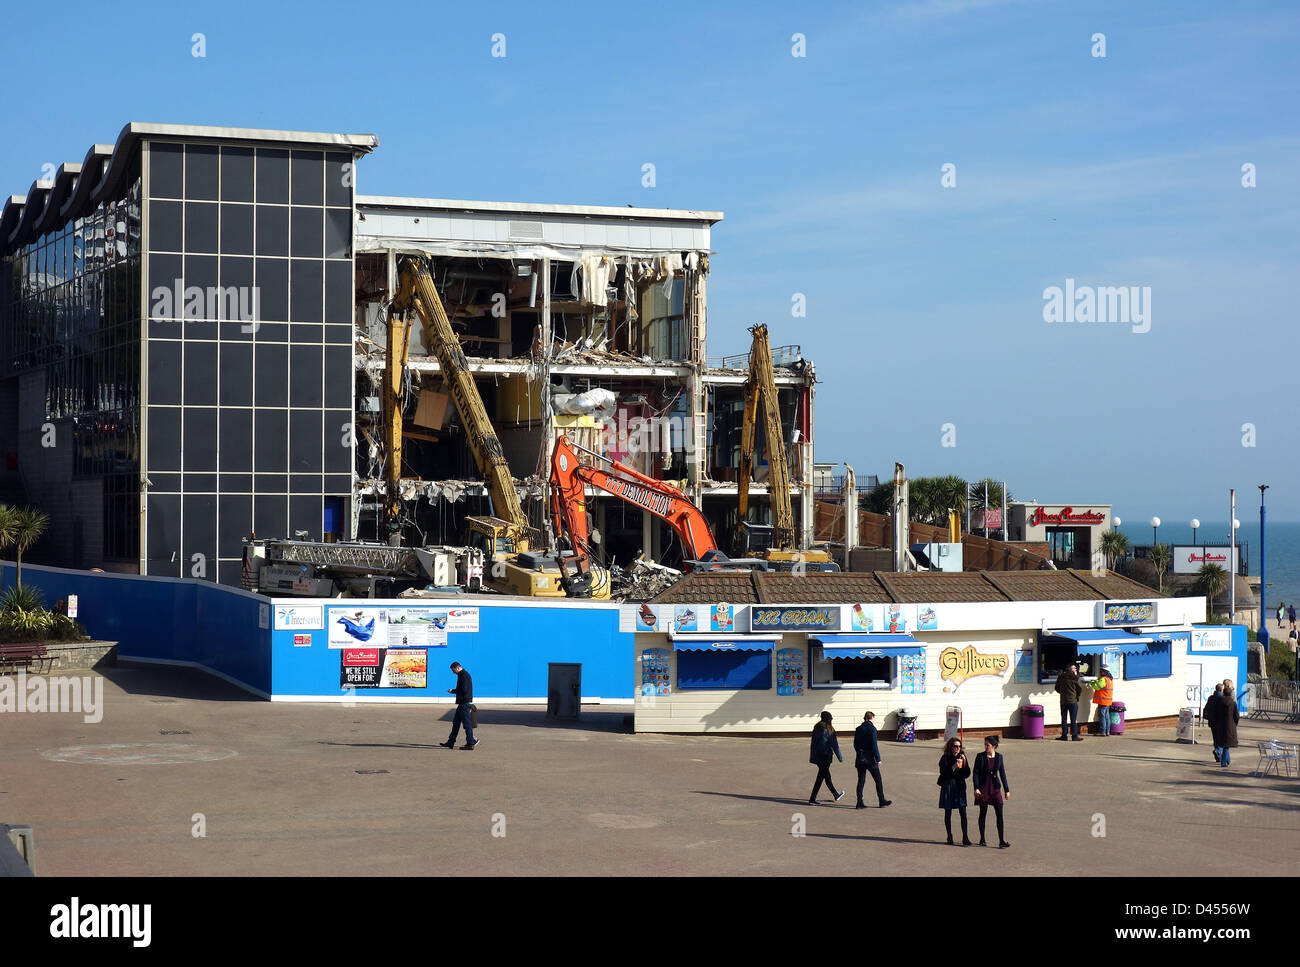 Imax cinema during demolition, Bournemouth, Dorset, Britain, UK Stock Photo